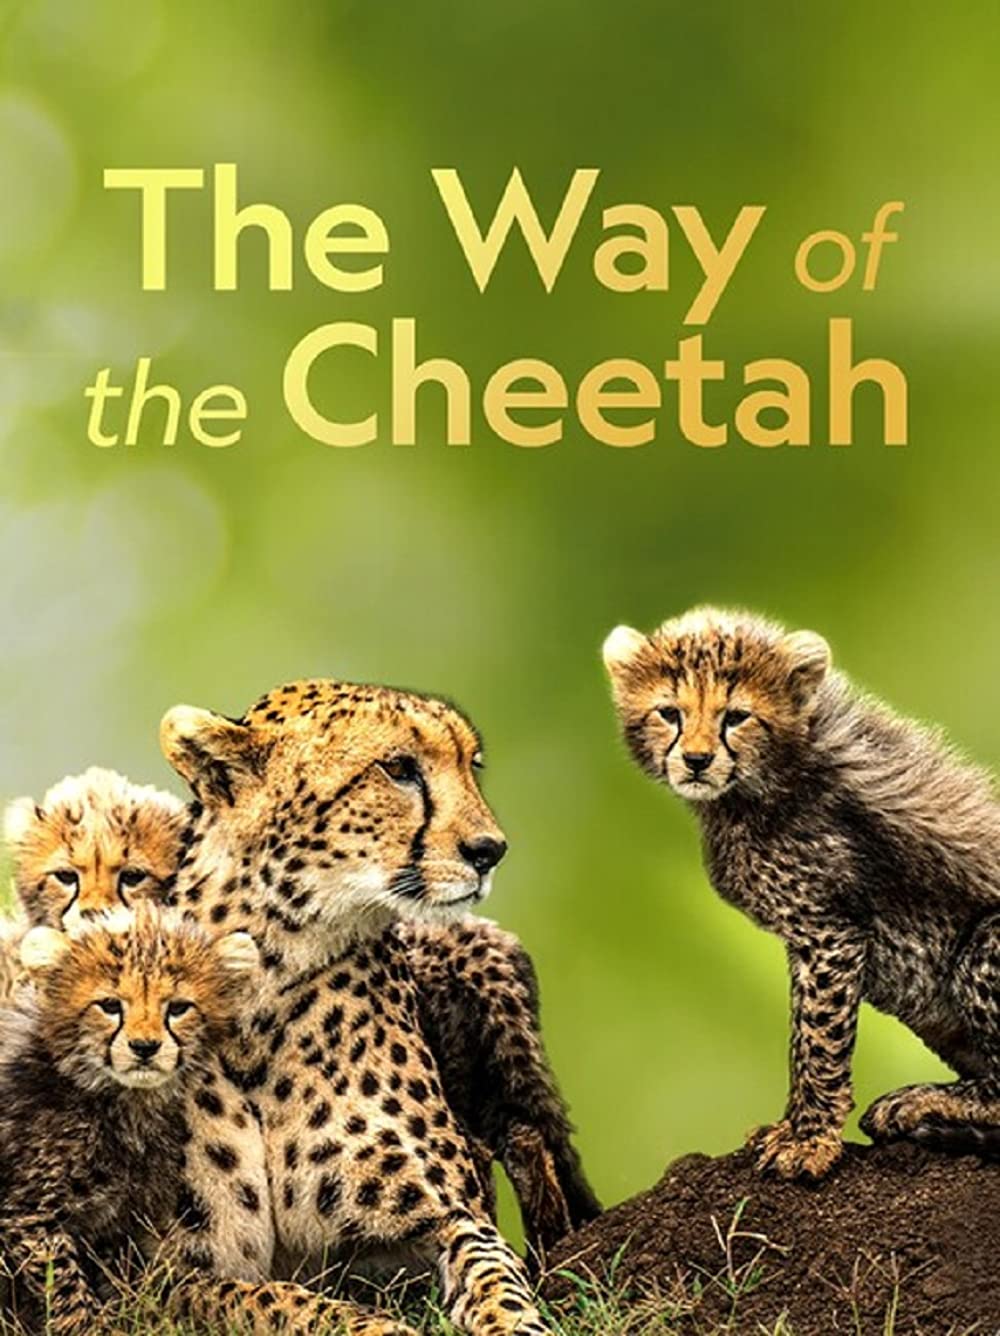 "Big Cat Week" The Way of the Cheetah